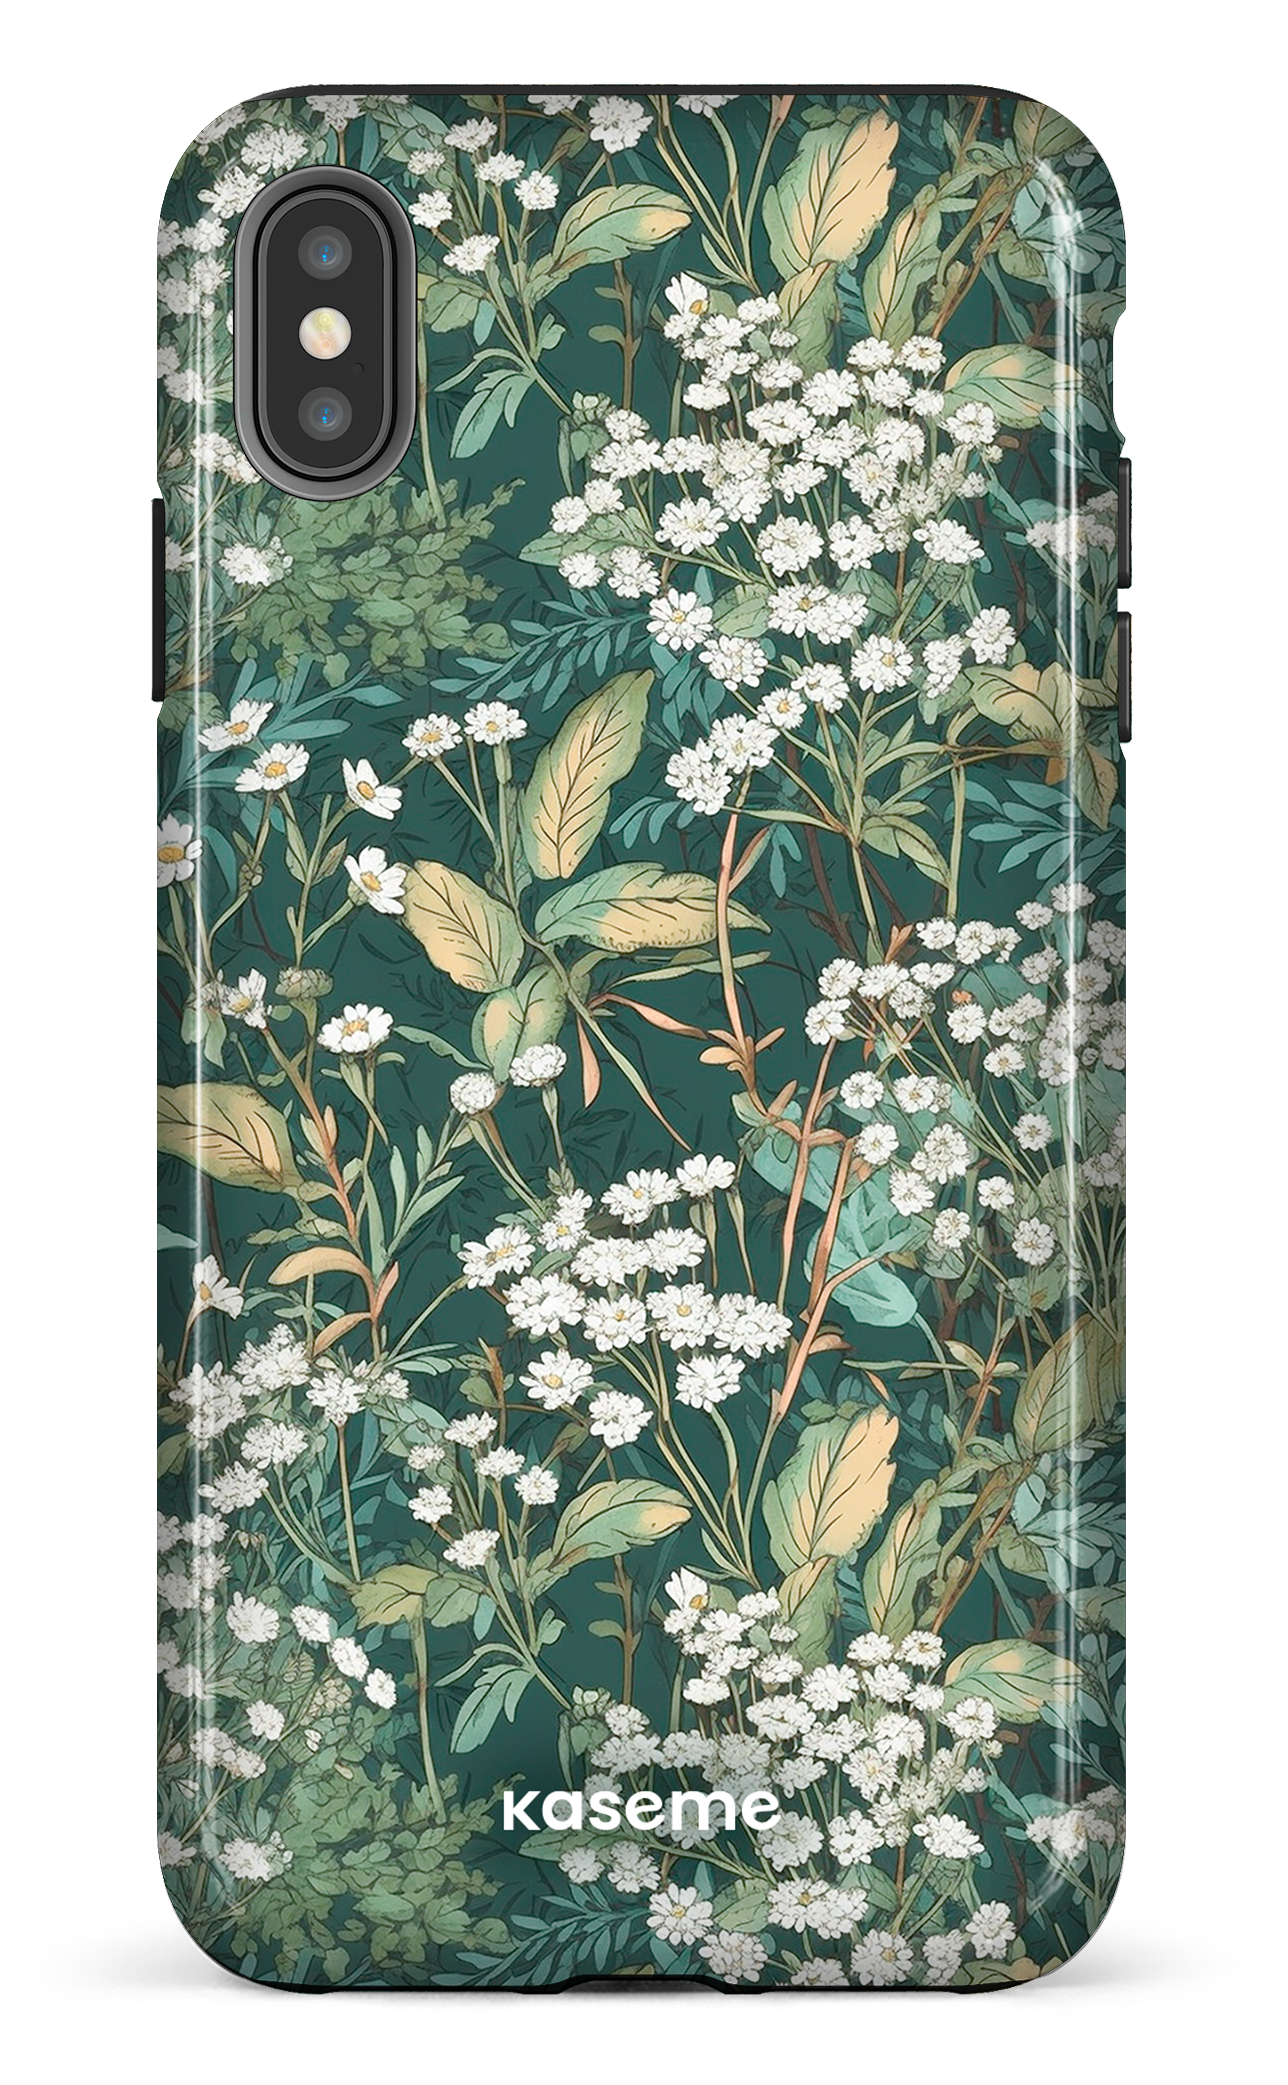 Untamed blossom - iPhone XS Max